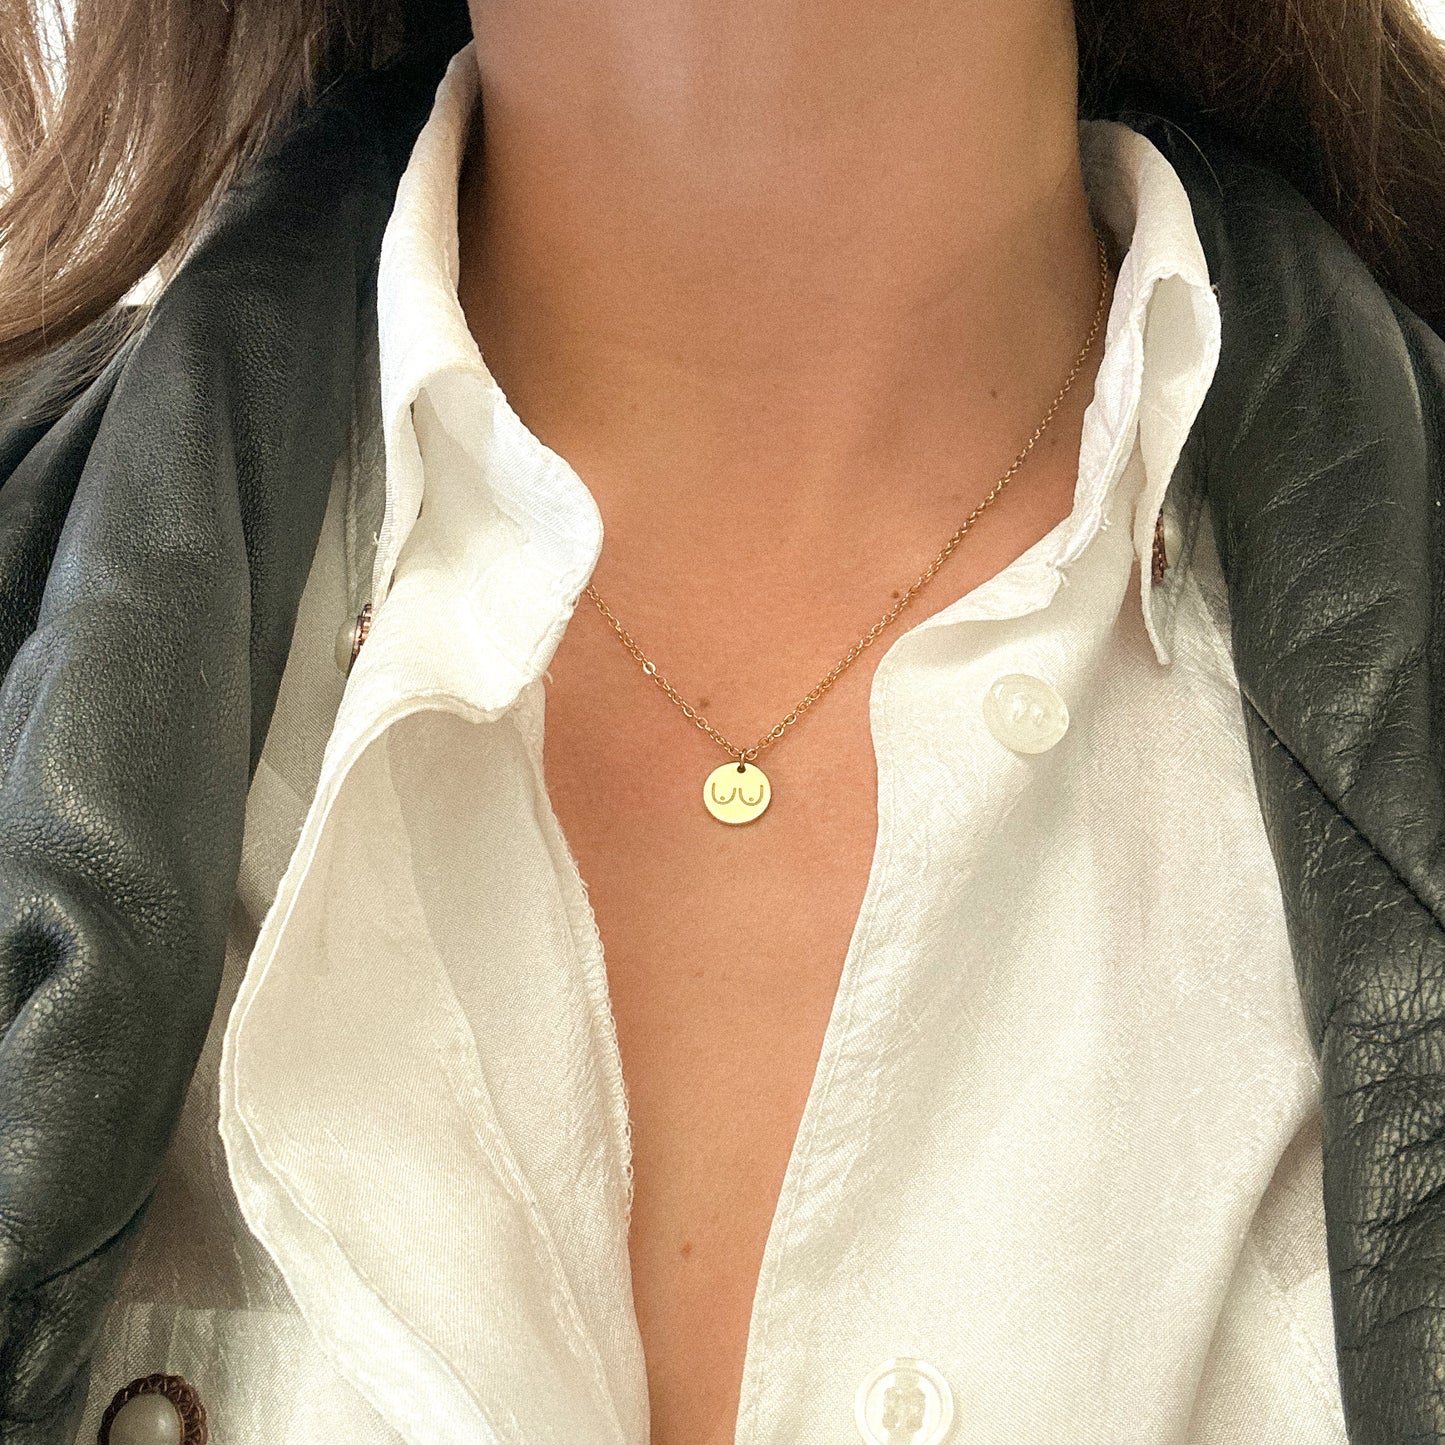 Titi necklace